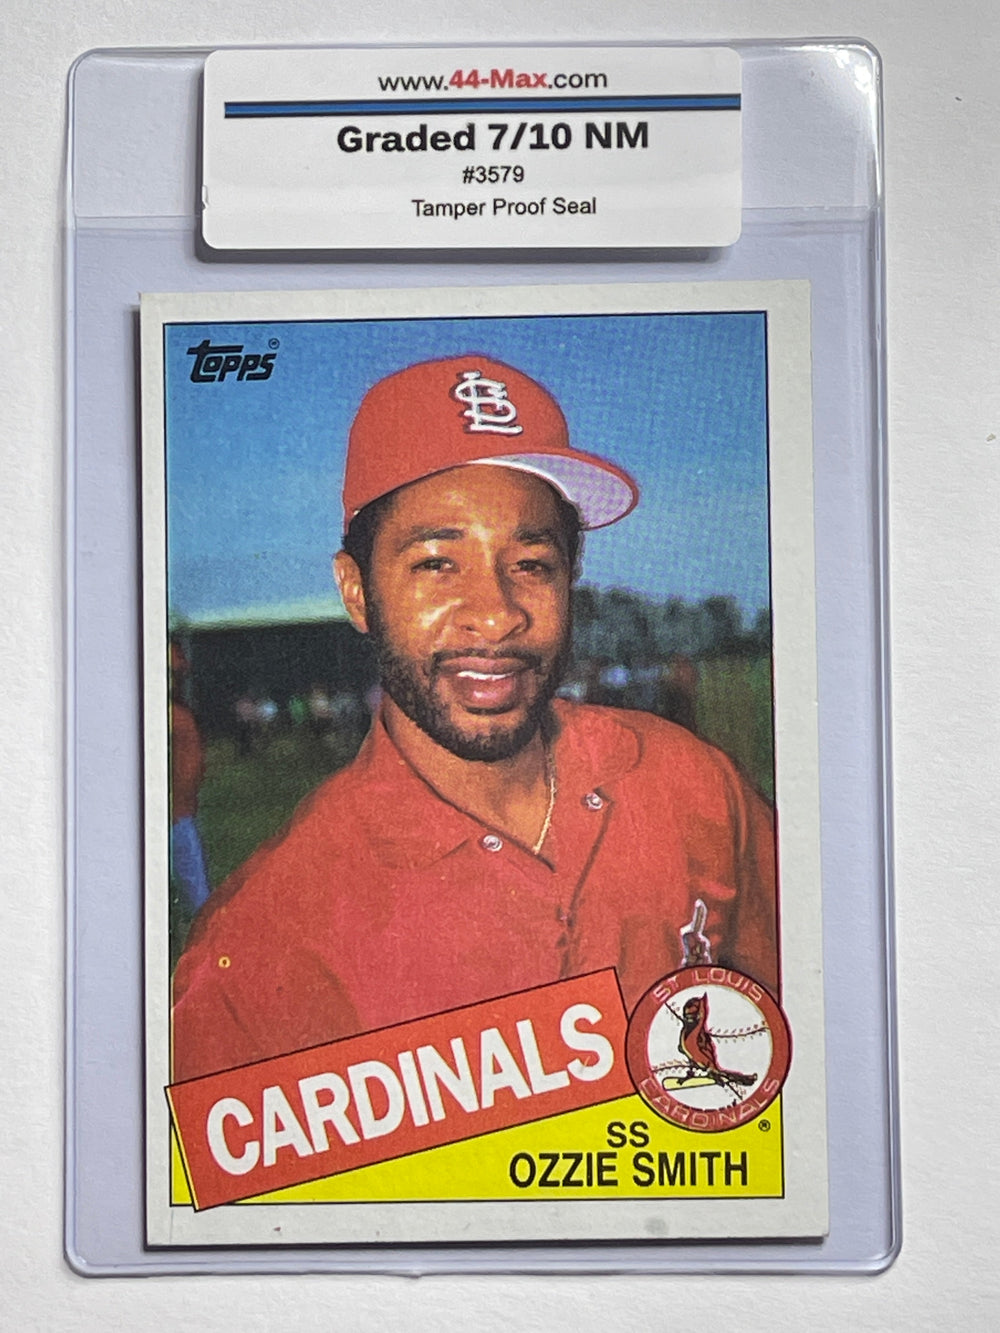 Ozzie Smith 1985 Topps Baseball Card. 44-Max 7/10 NM #3579